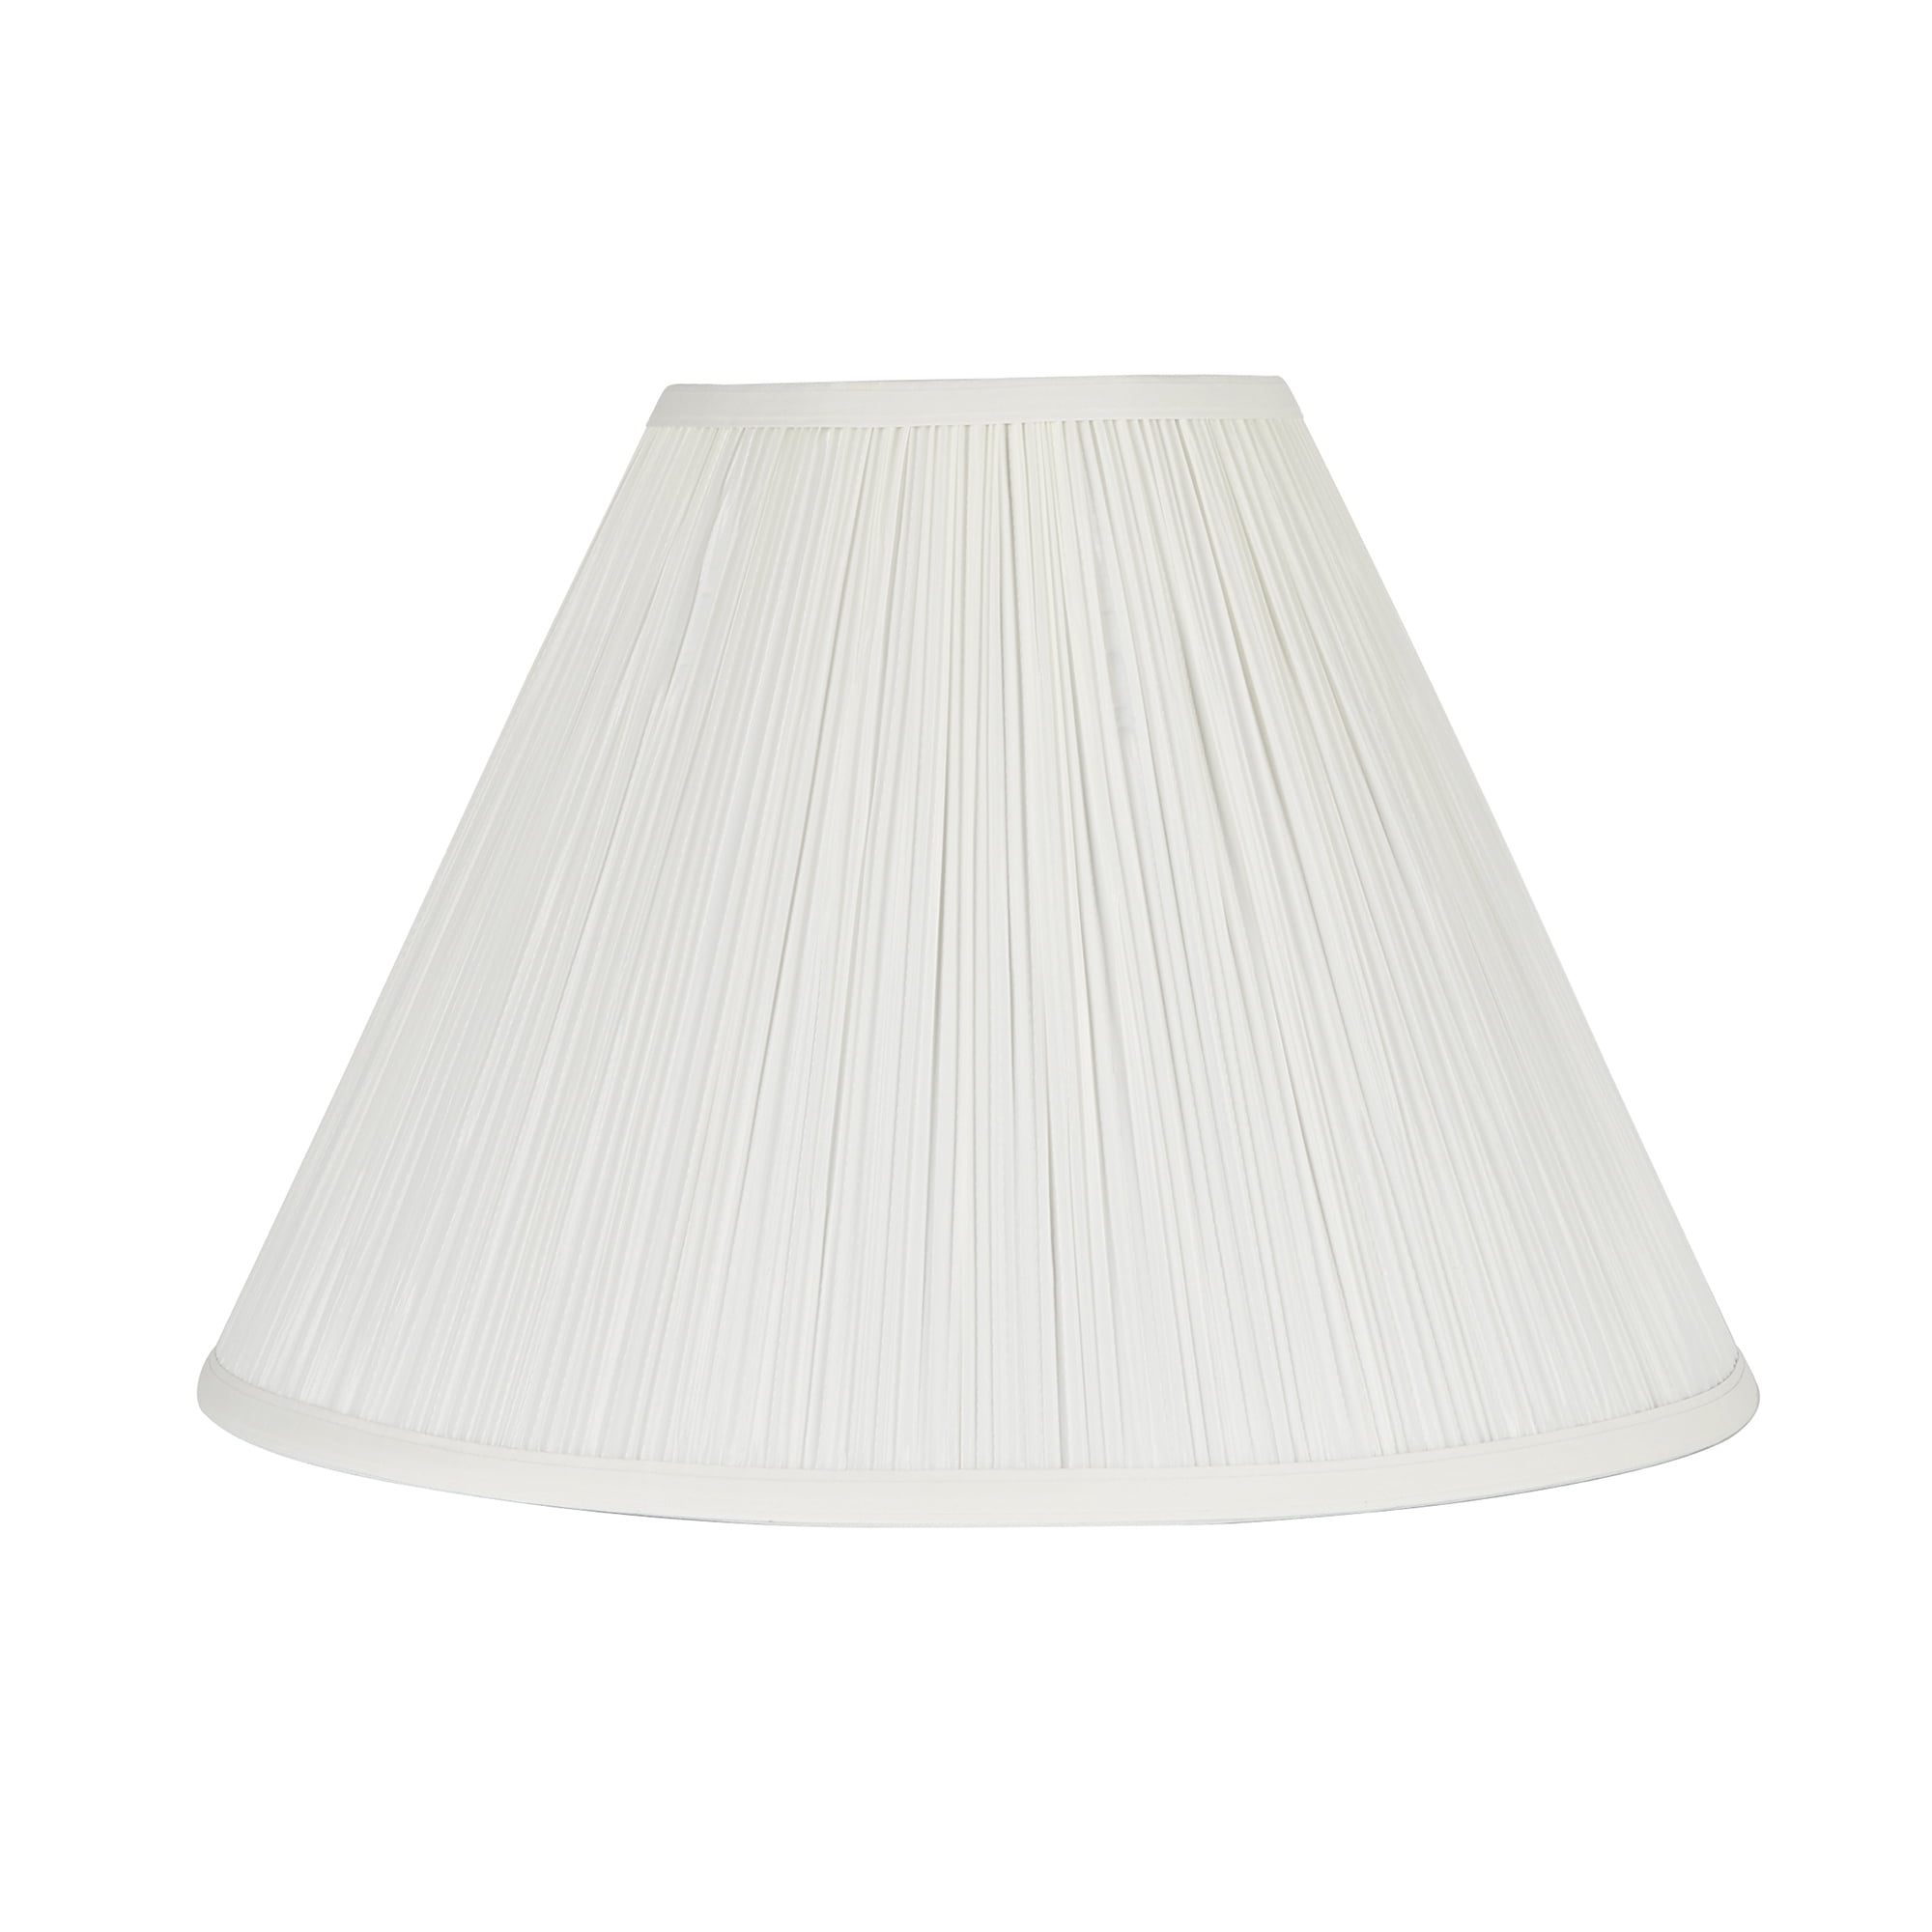 Mainstays Pleat Empire Table Lamp Shade, off-White - Walmart.com